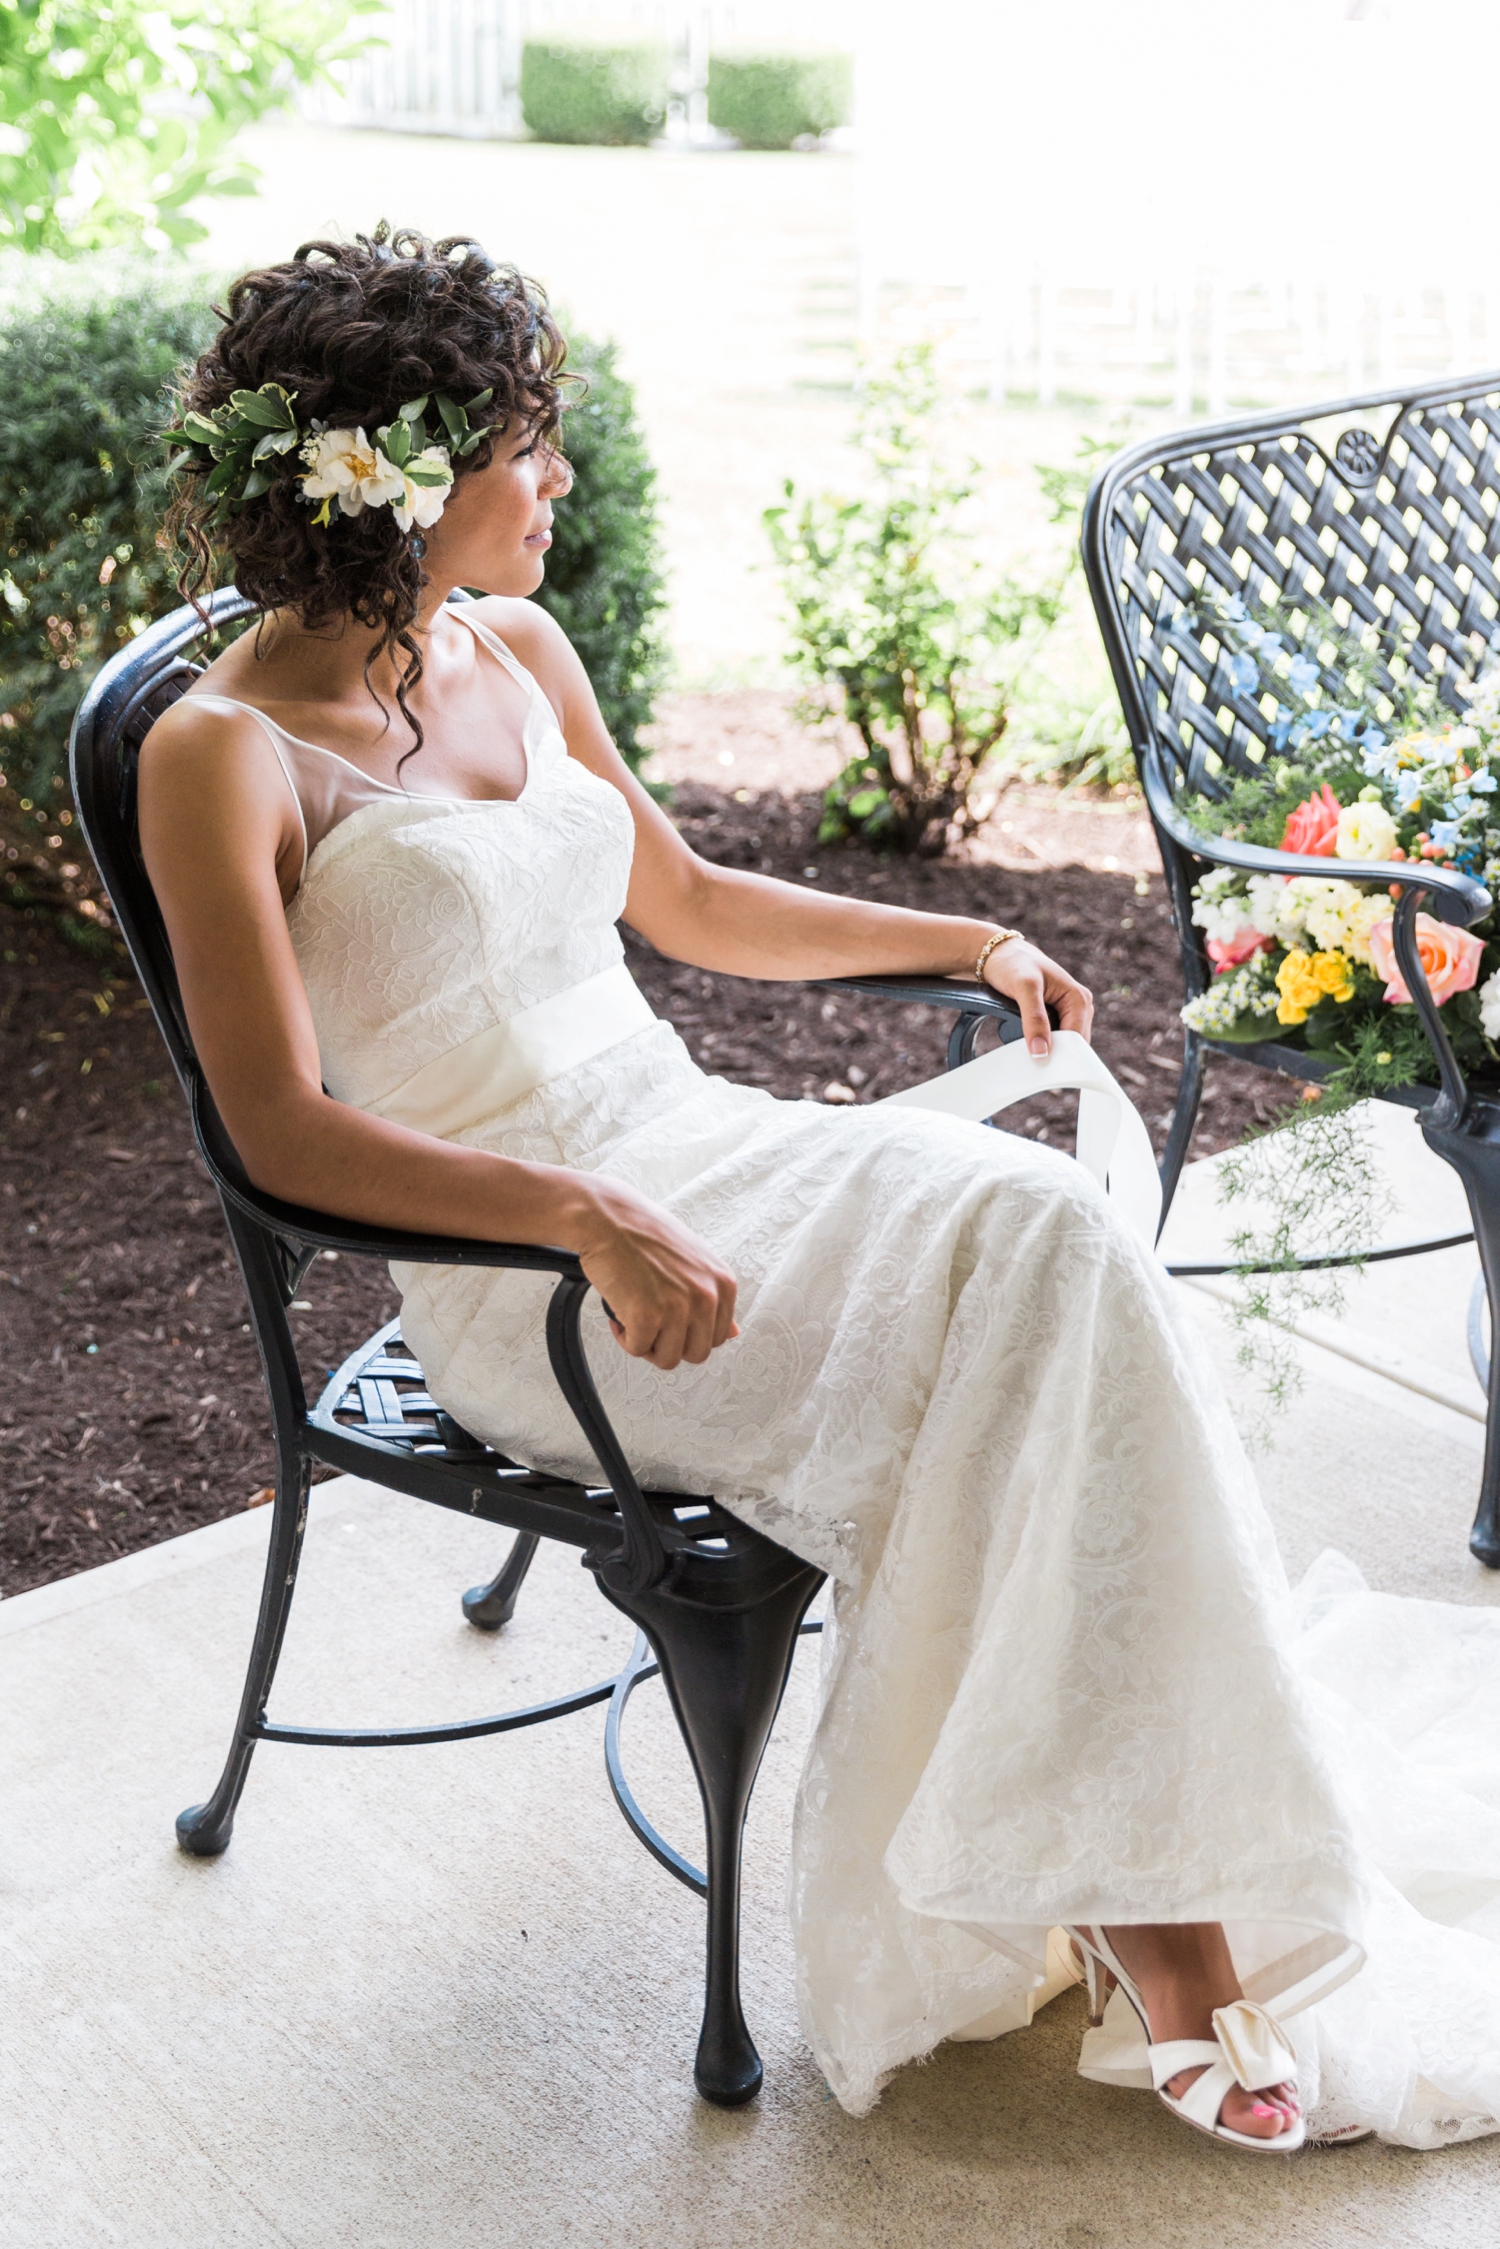 Wedding-at-The-Savannah-Center-West-Chester-Ohio-Photography-Chloe-Luka-Photography_7440.jpg